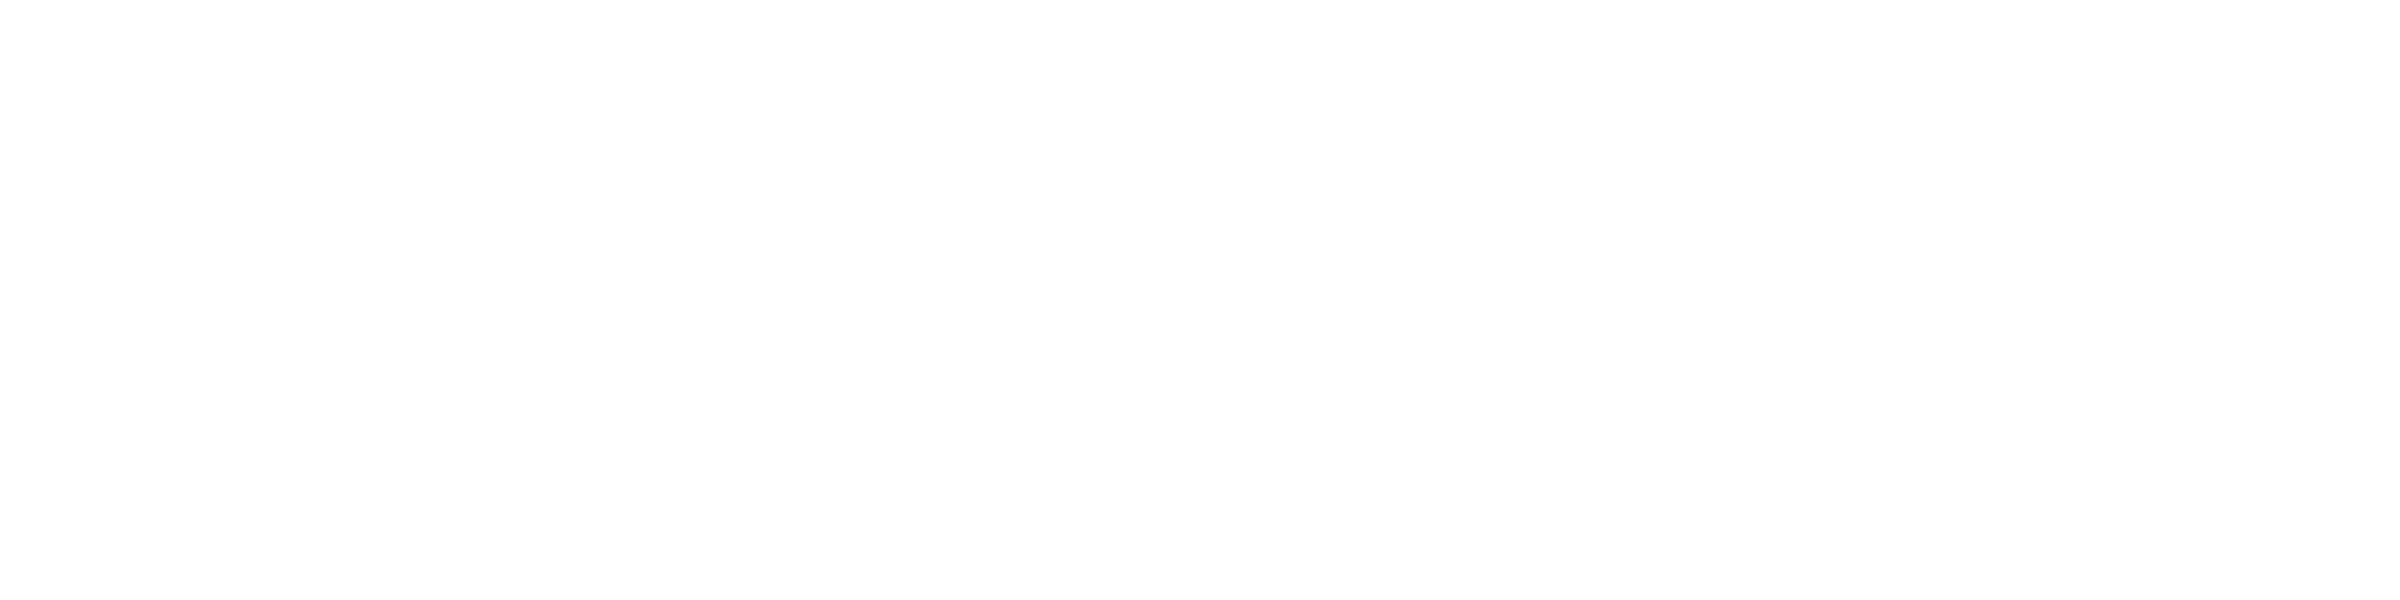 appcentric logo ph